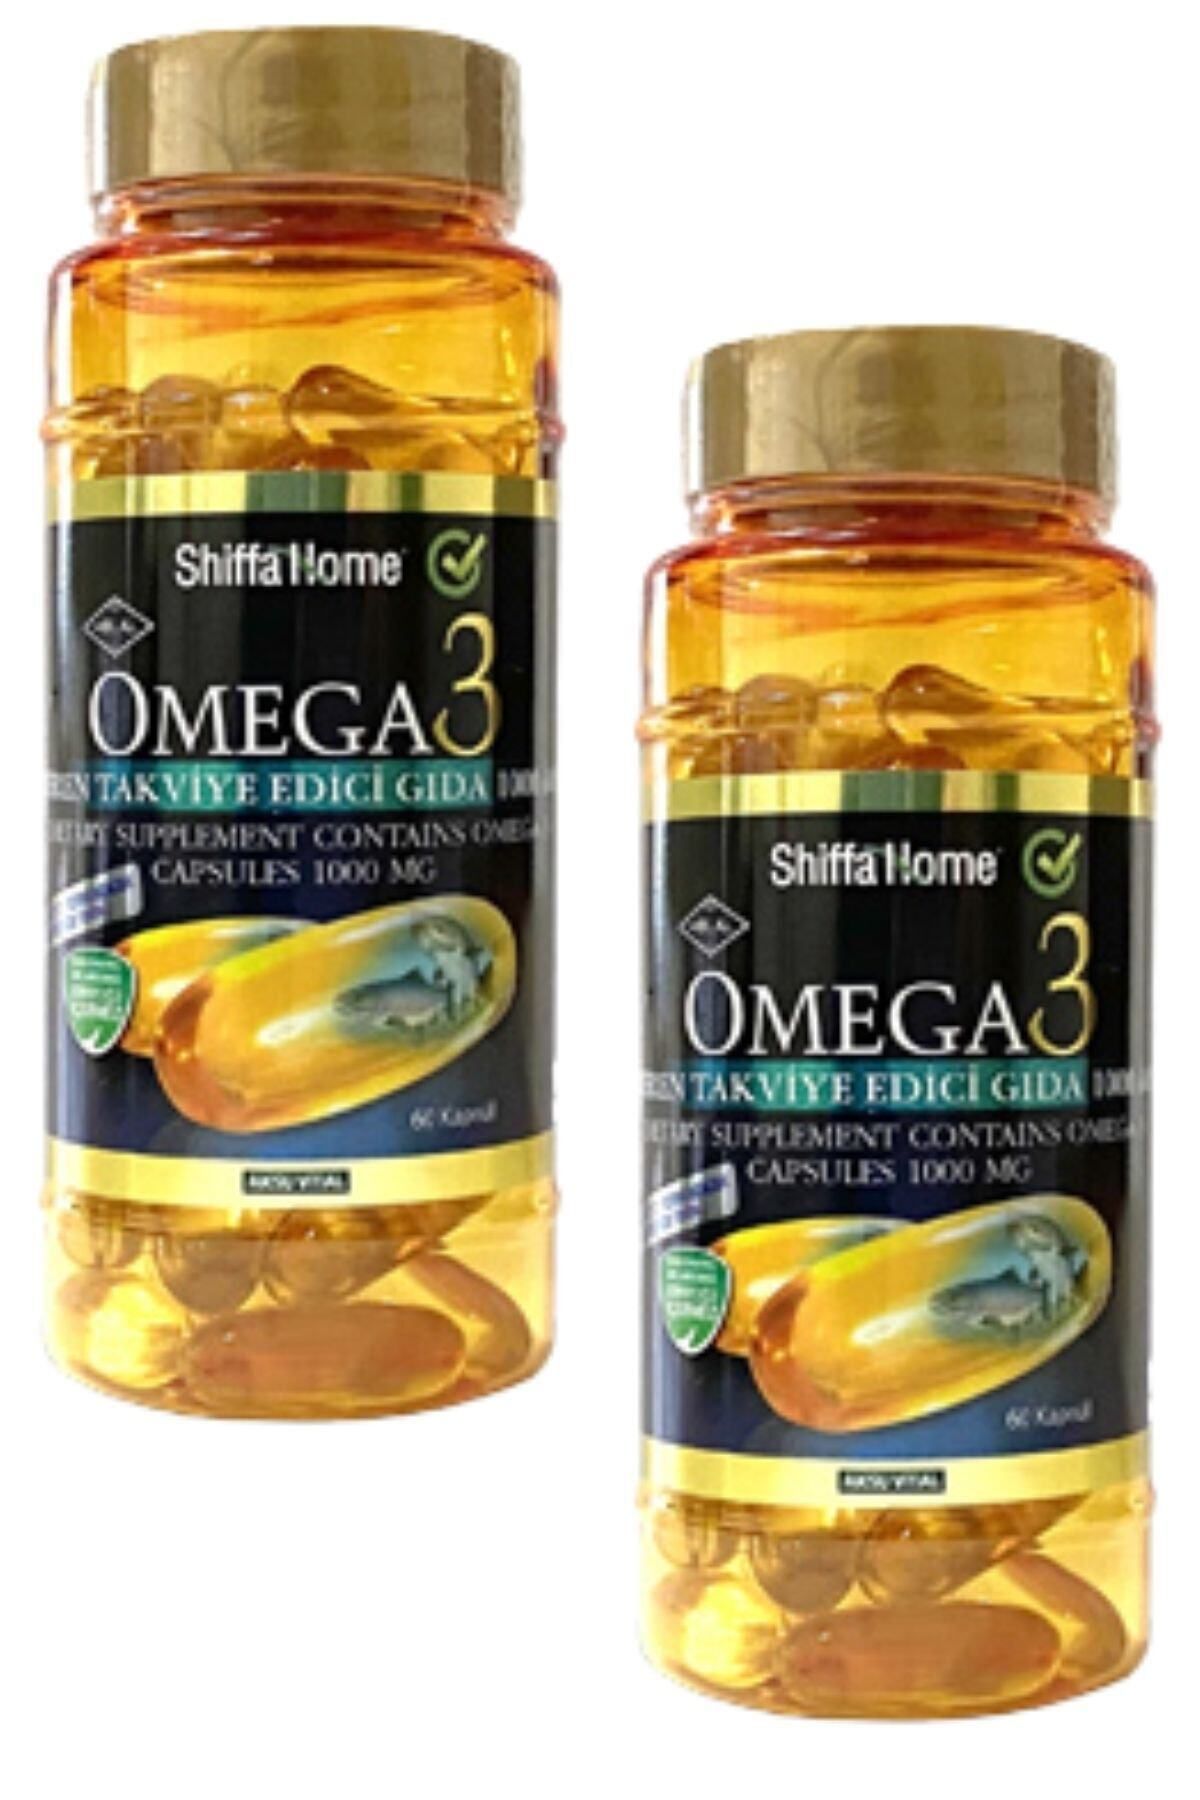 Shiffa Home Omega 3 Balık Yağı Trigliserit Form 1000mg 60 Softgel X 2 Adet